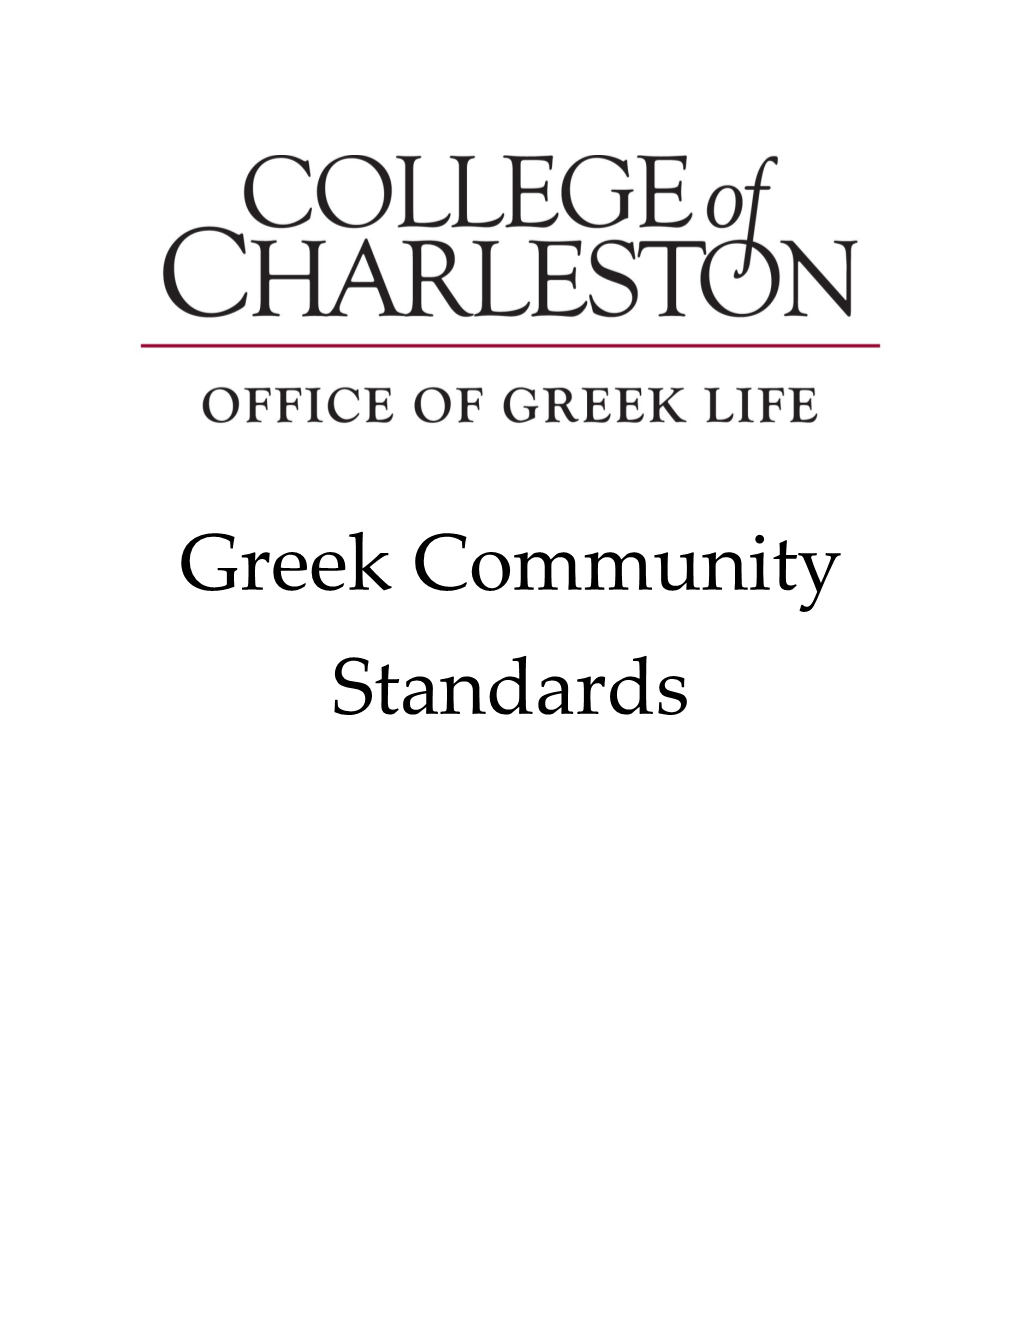 Greek Community Standards